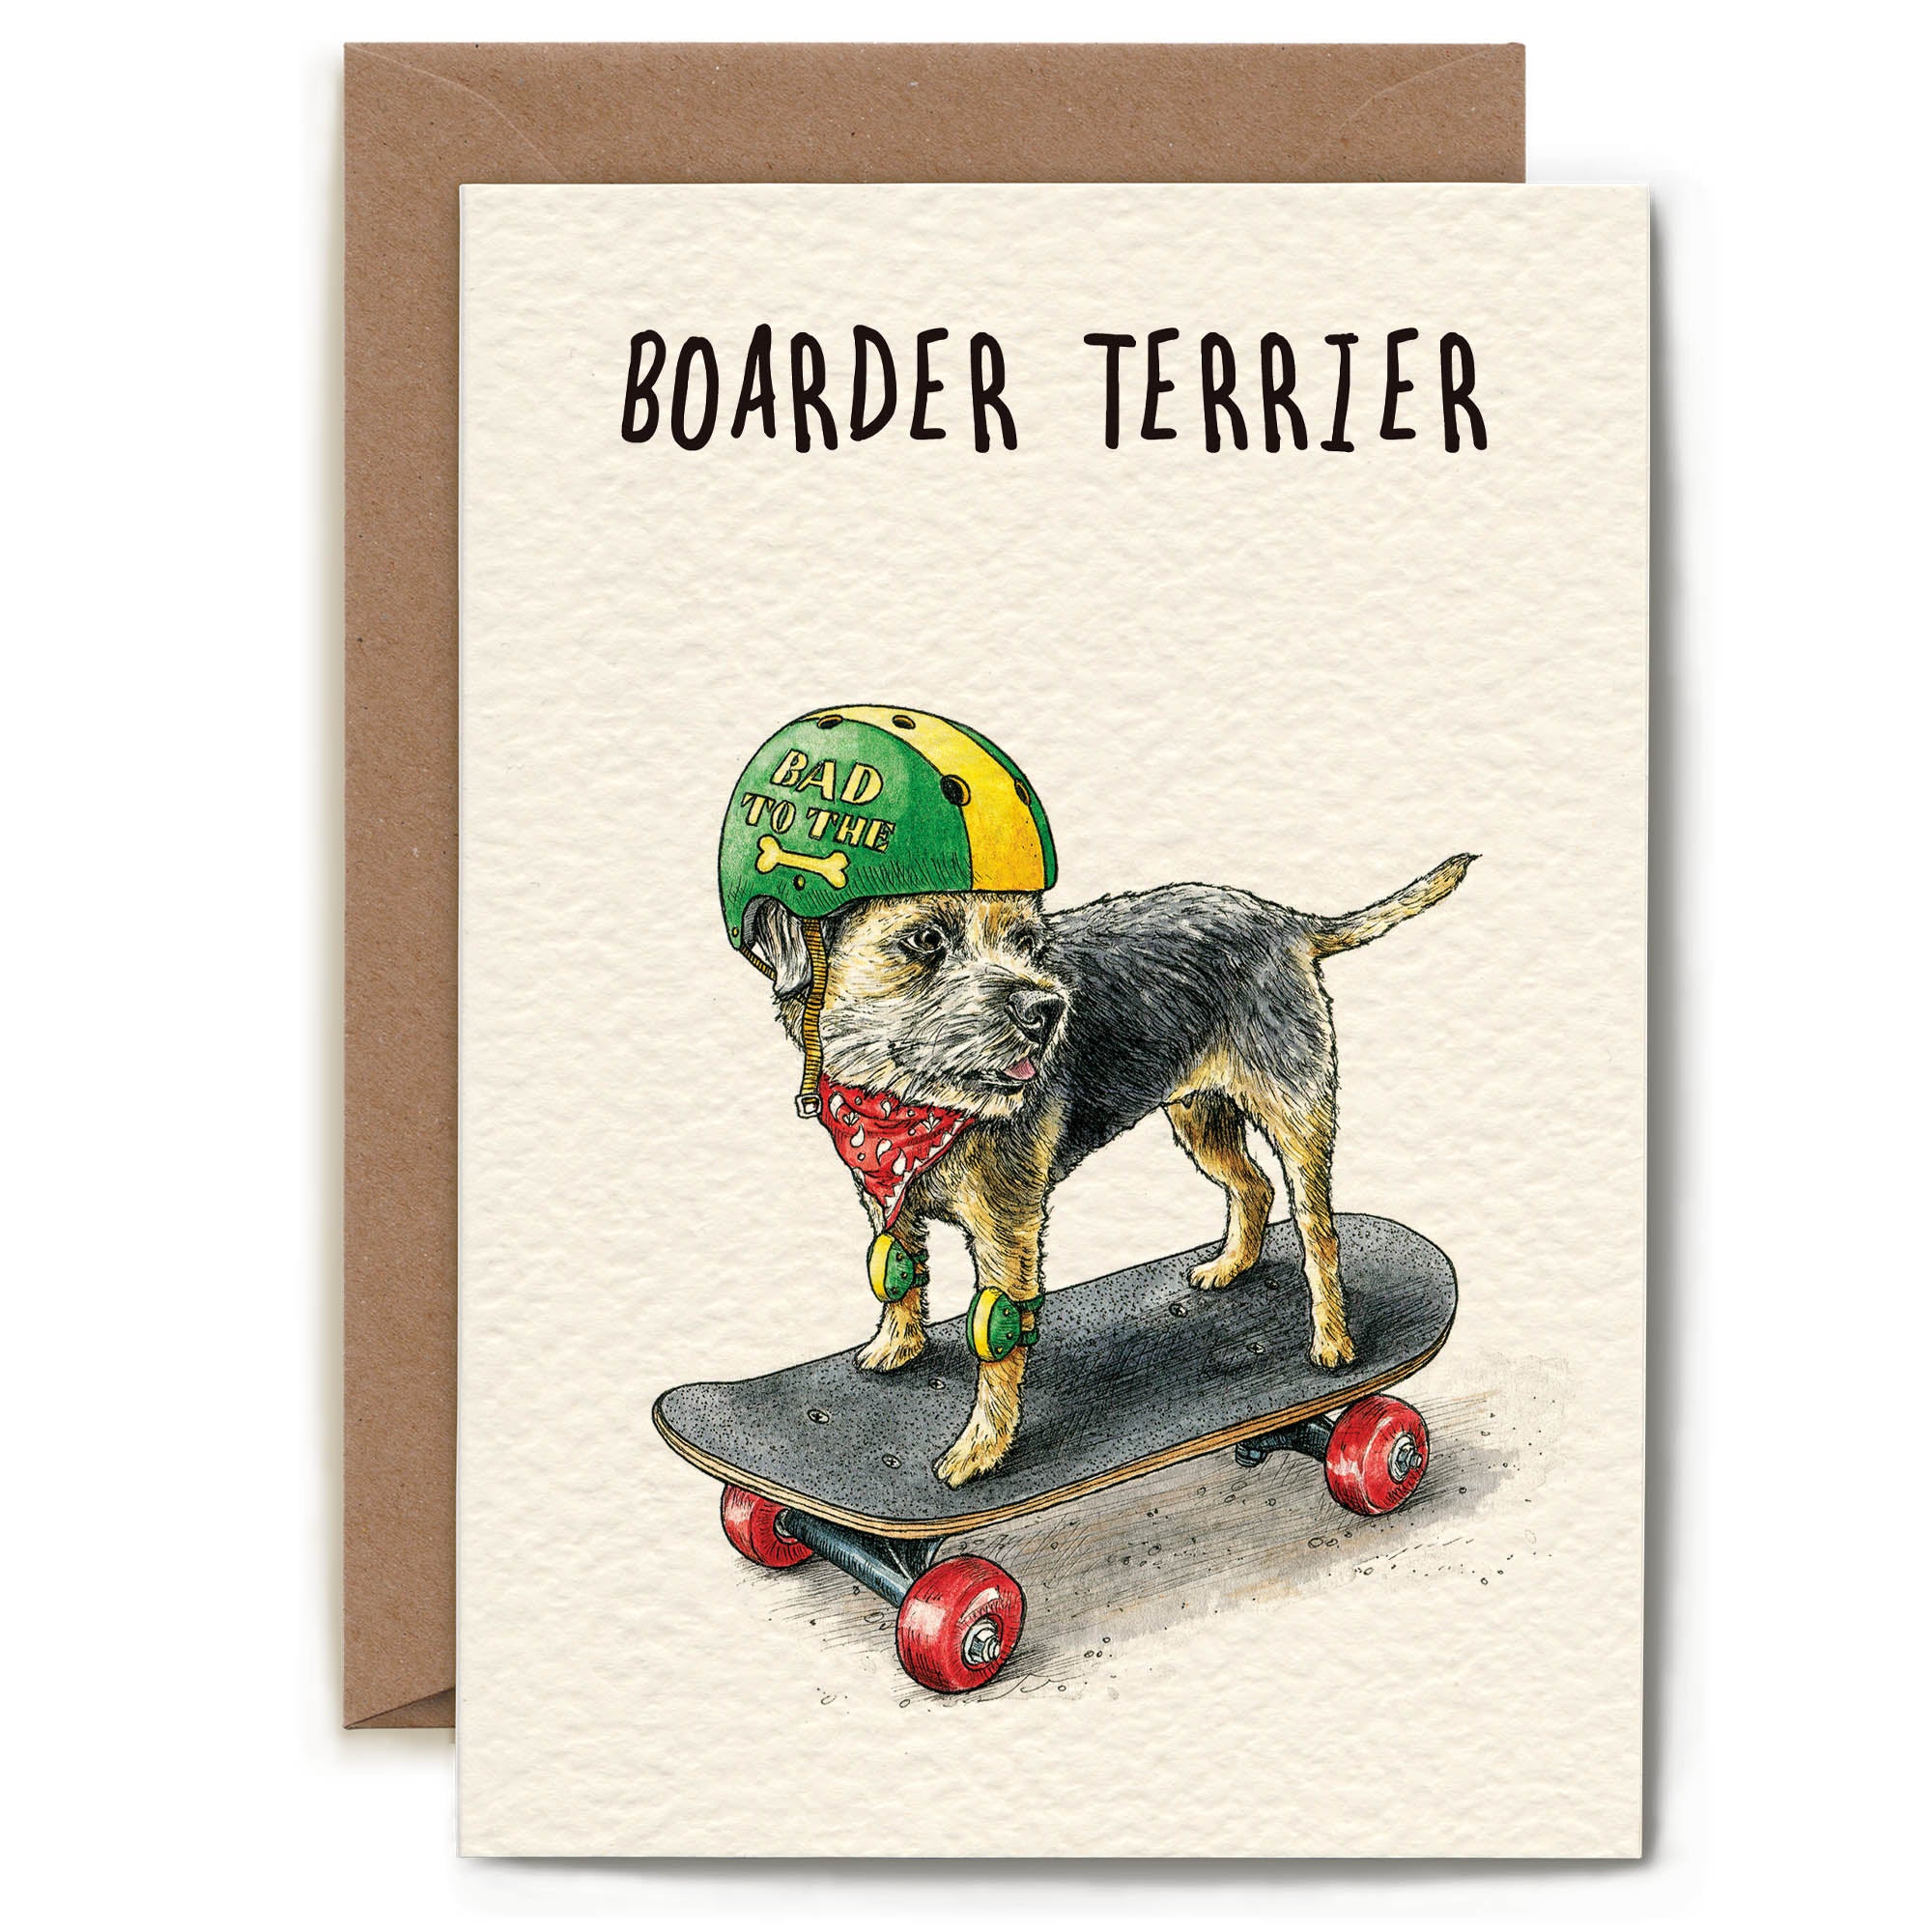 Boarder Terrier Card by Bewilderbeest